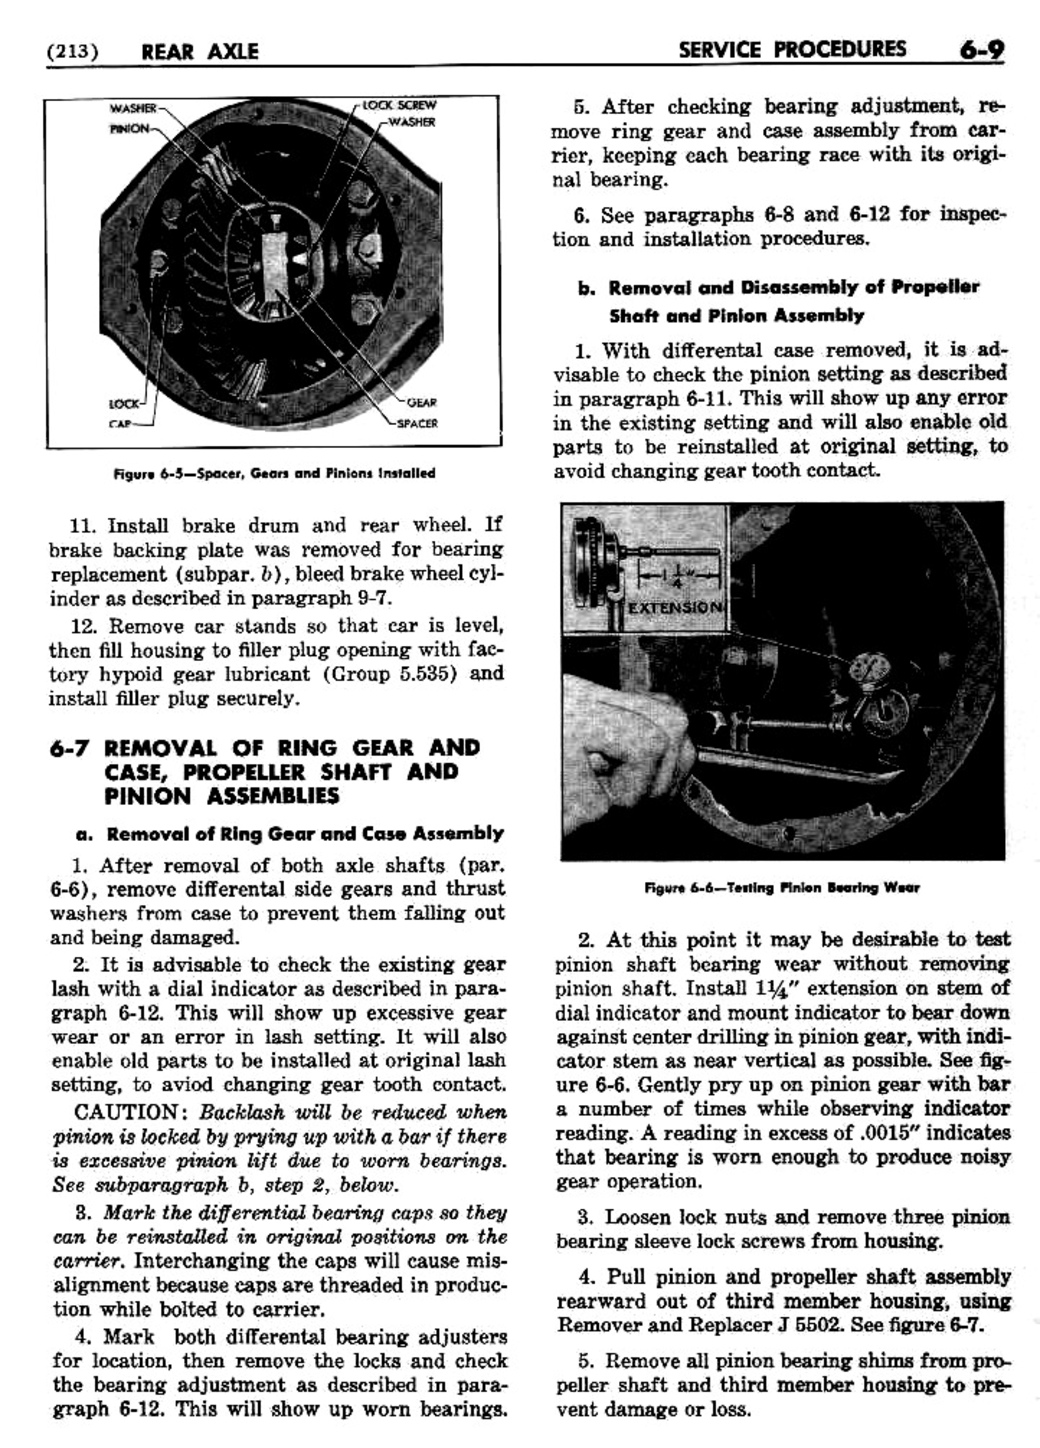 n_07 1955 Buick Shop Manual - Rear Axle-009-009.jpg